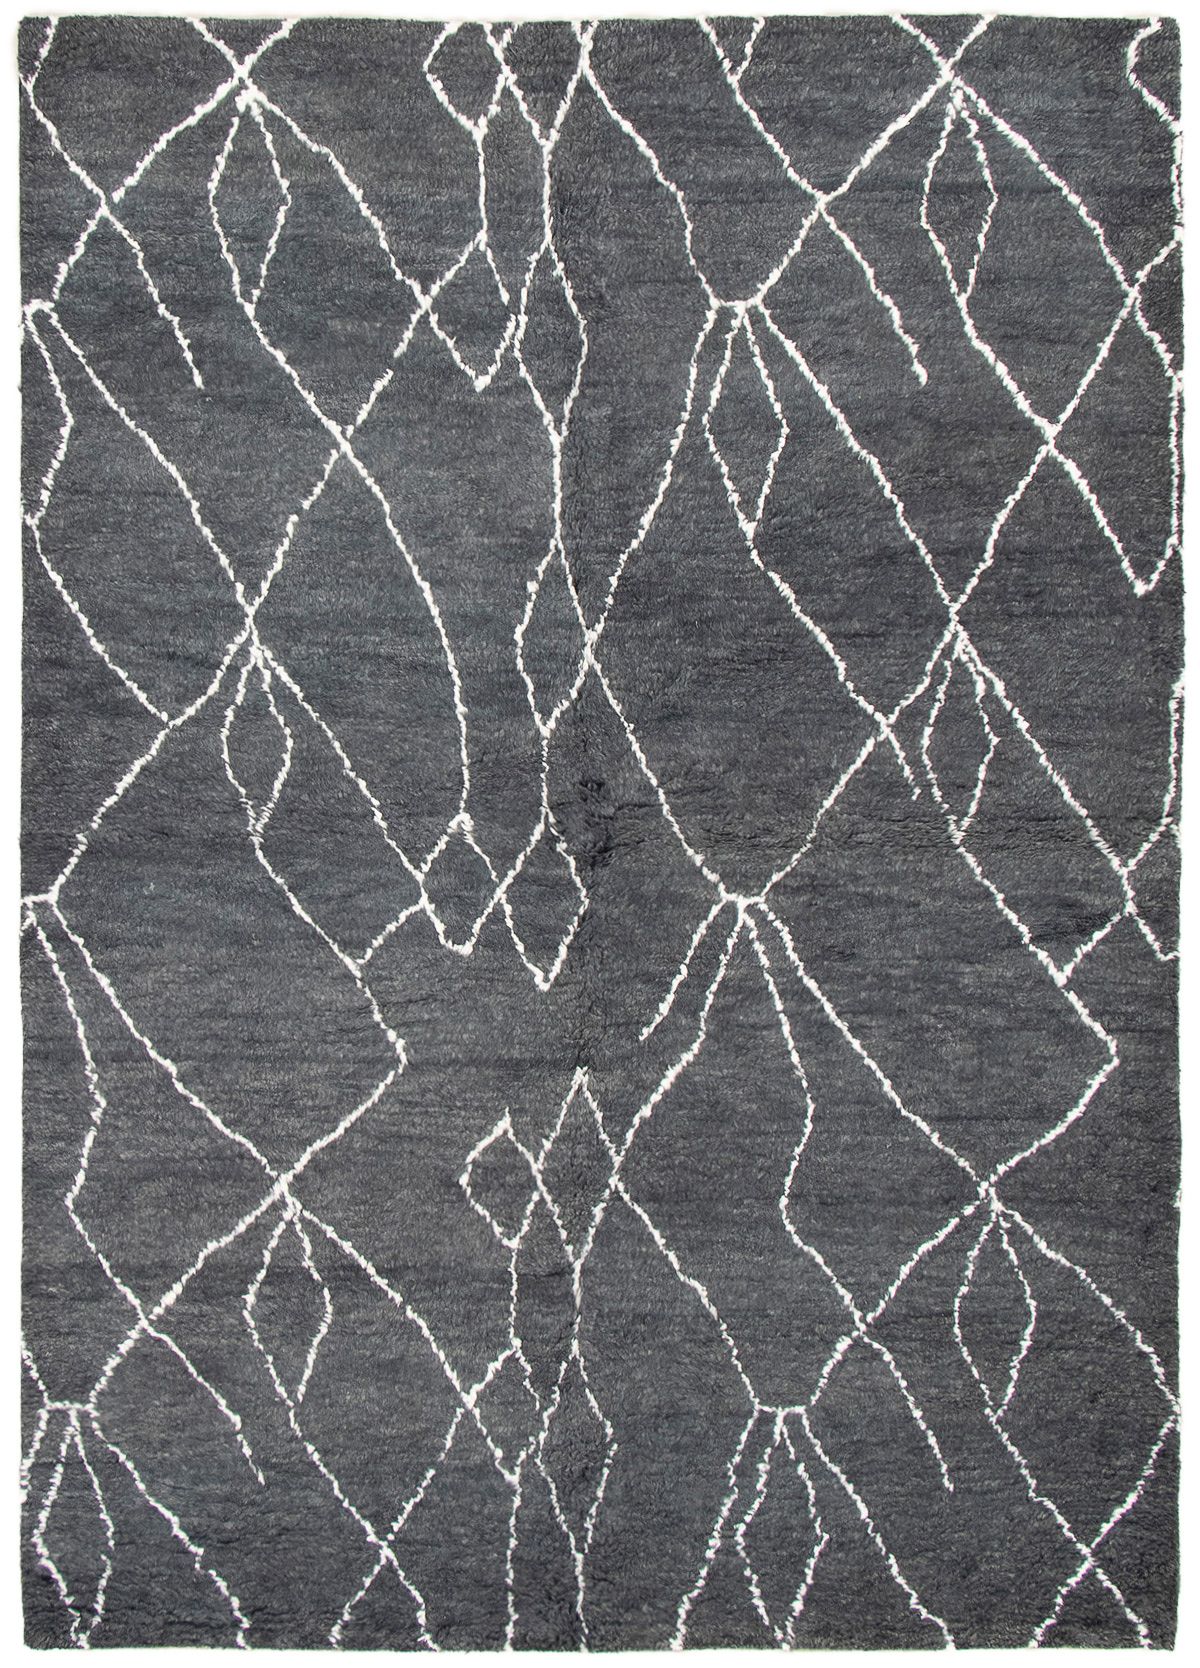 Hand-knotted Arlequin Dark Grey Wool Rug 6'4" x 9'0" Size: 6'4" x 9'0"  